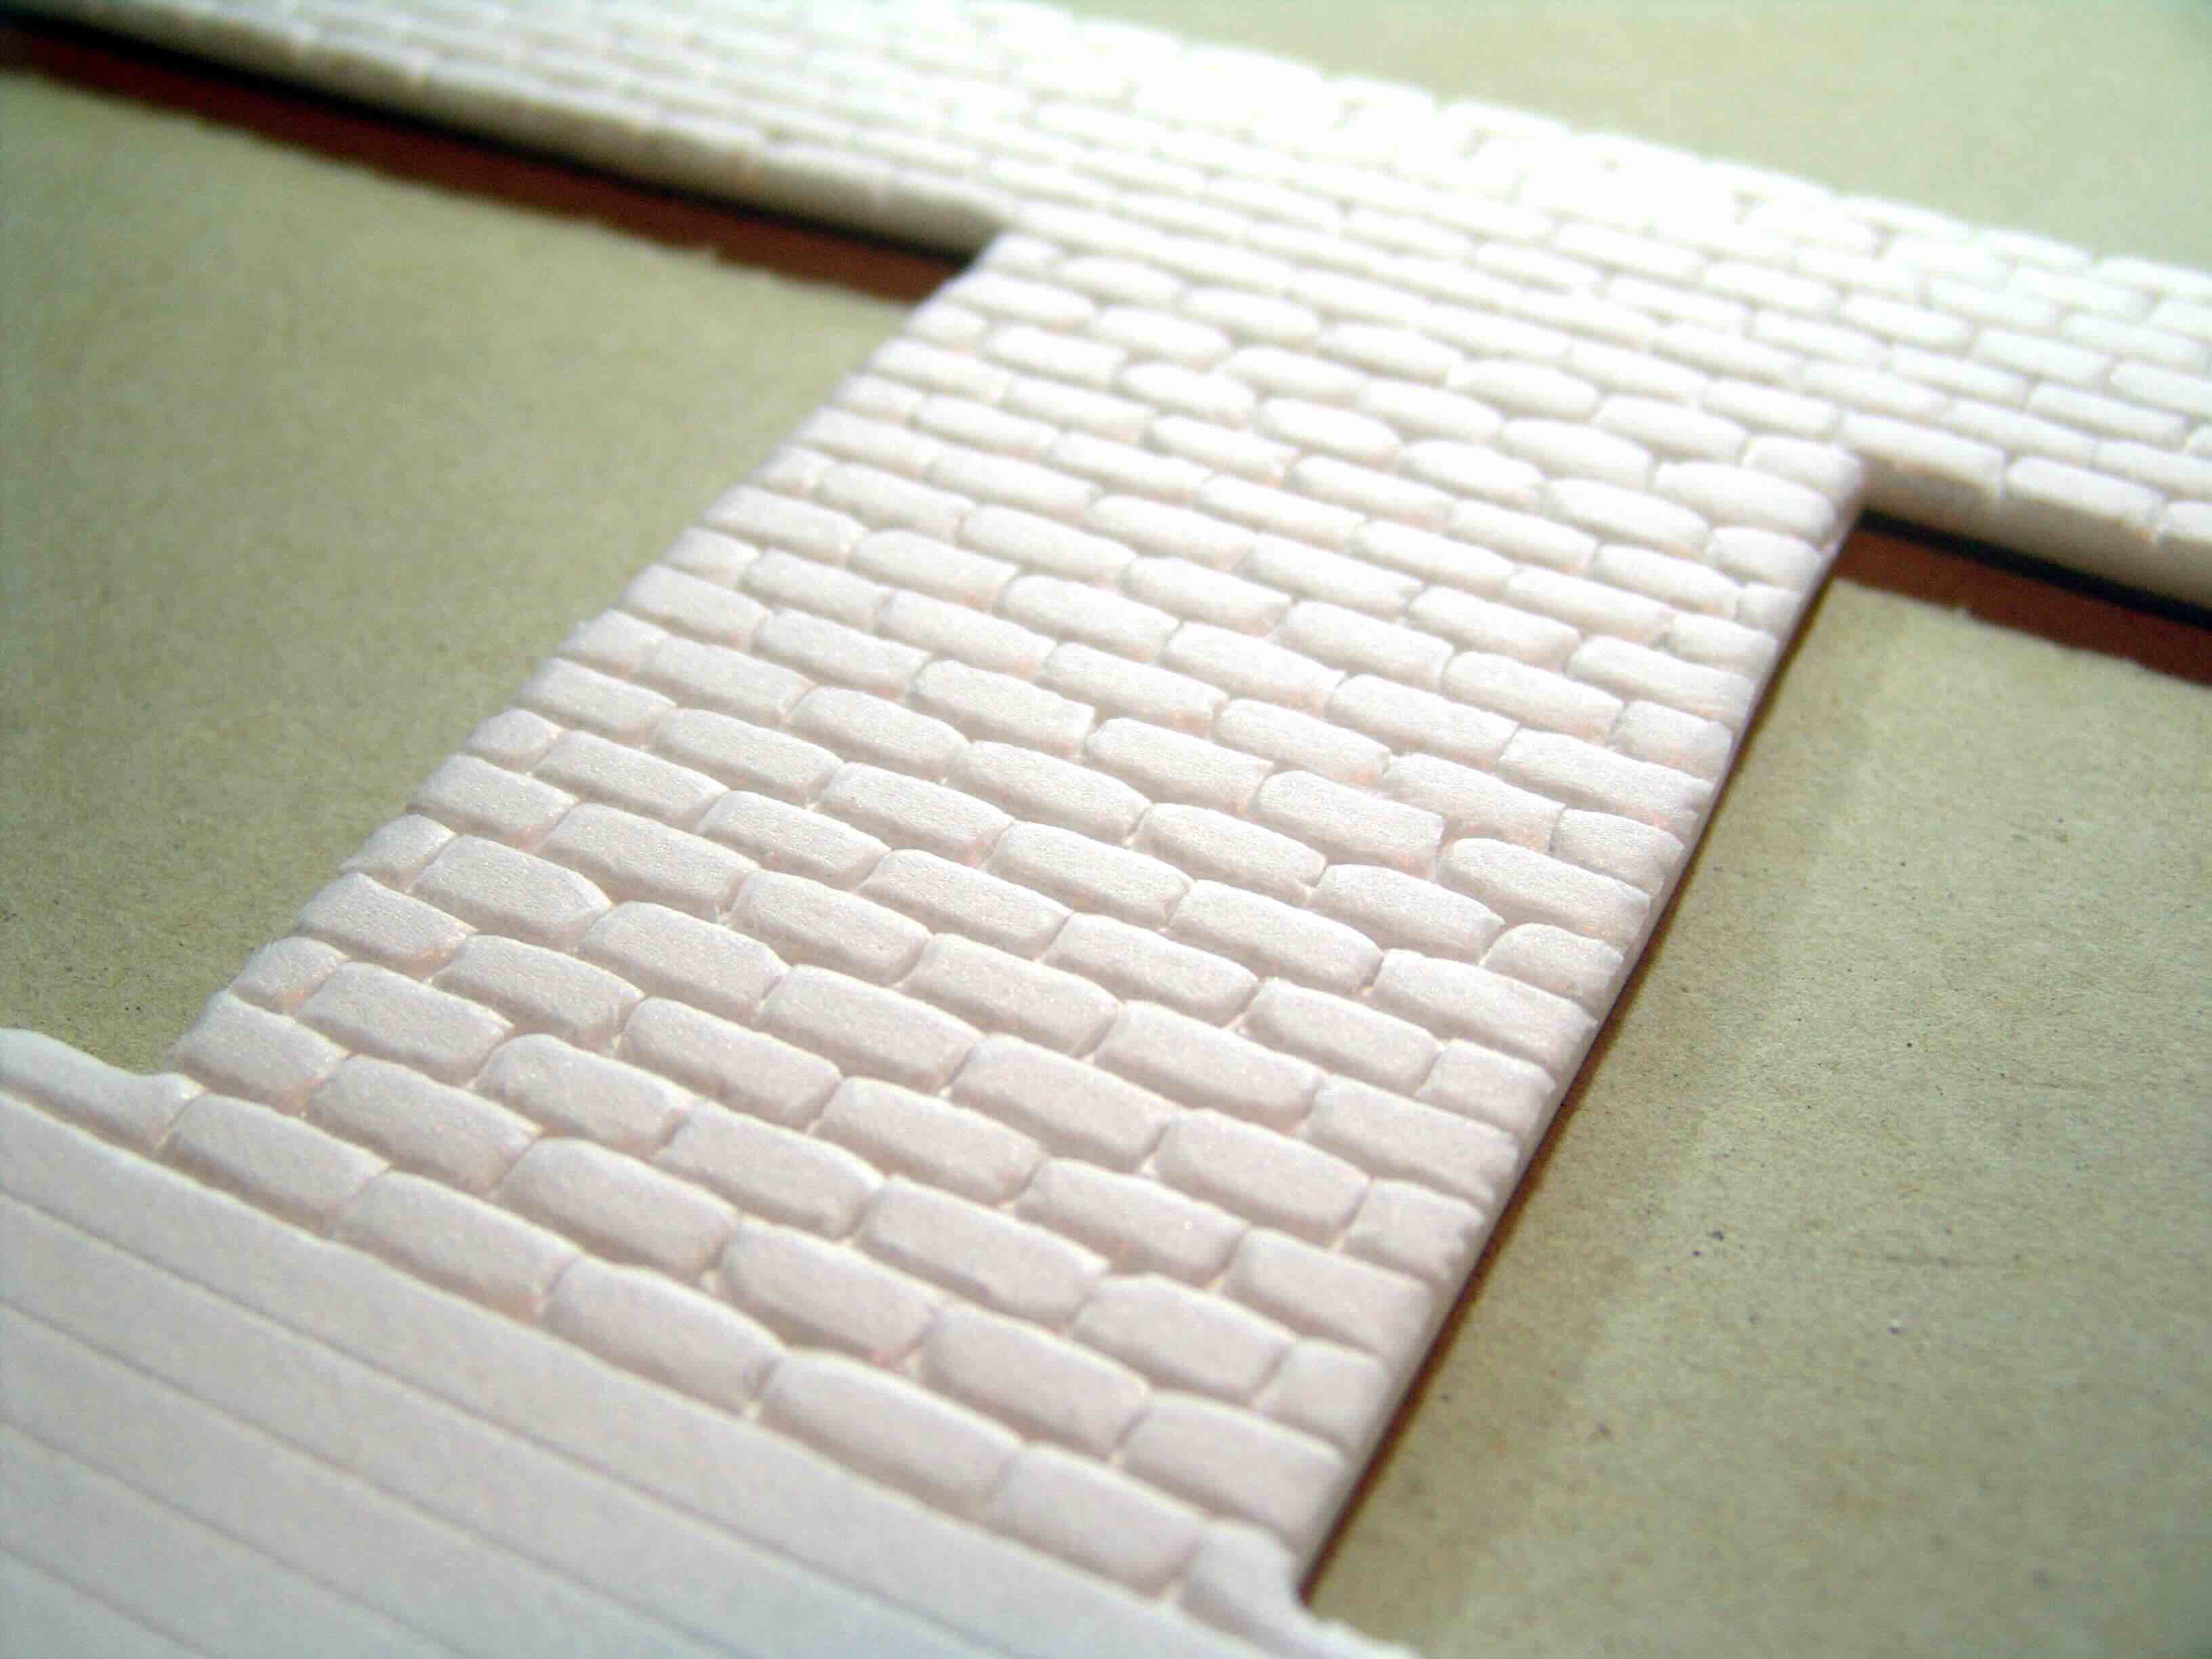 How To Make A Miniature Brick Wall